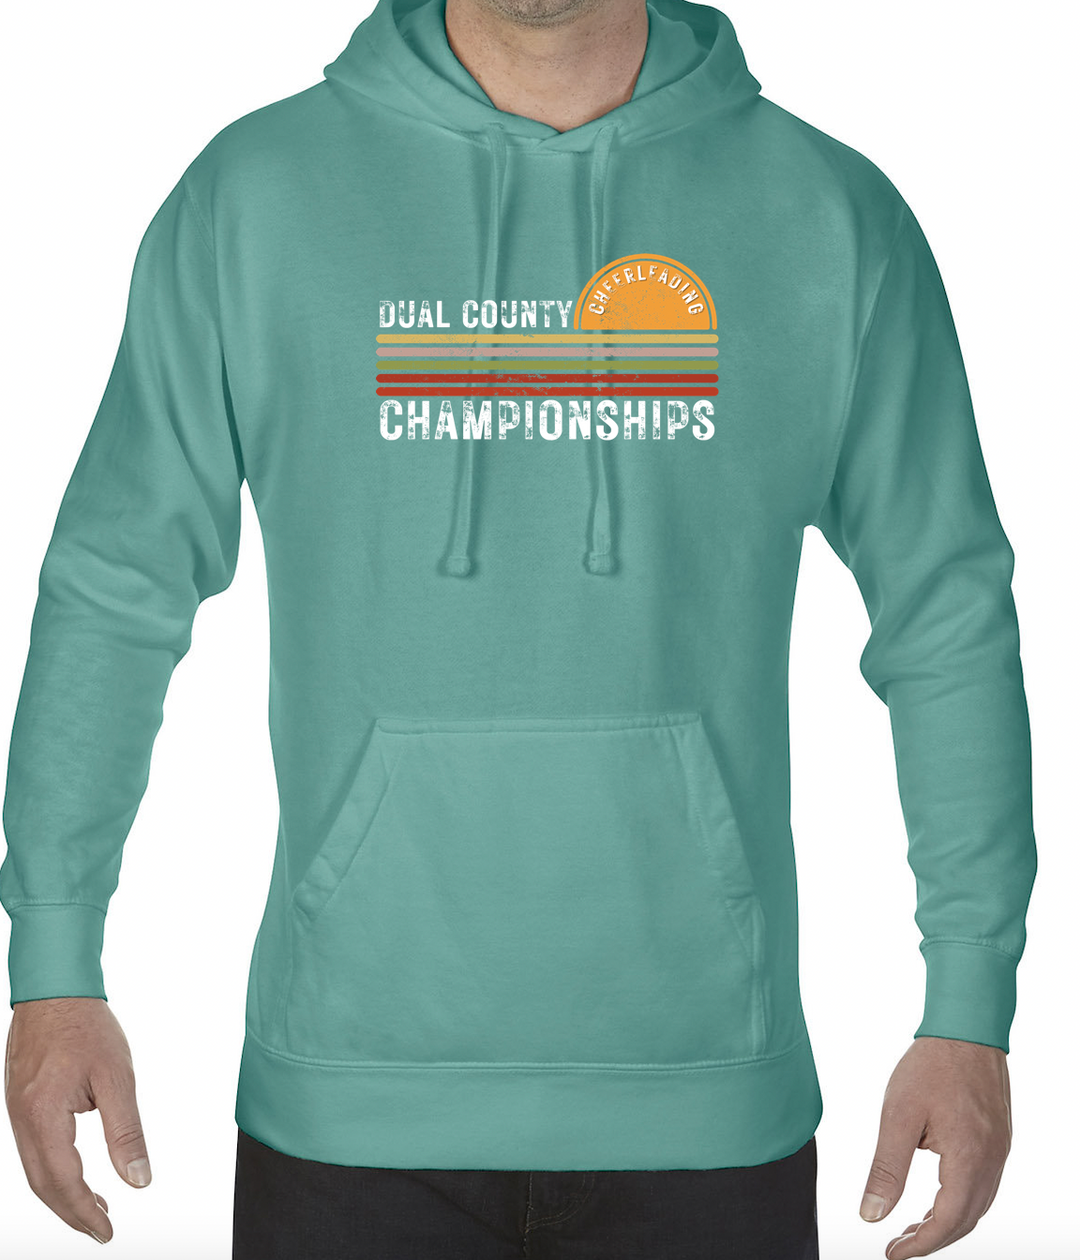 DCL Cheer Championship - Adult Unisex Hooded Sweatshirt (1567)